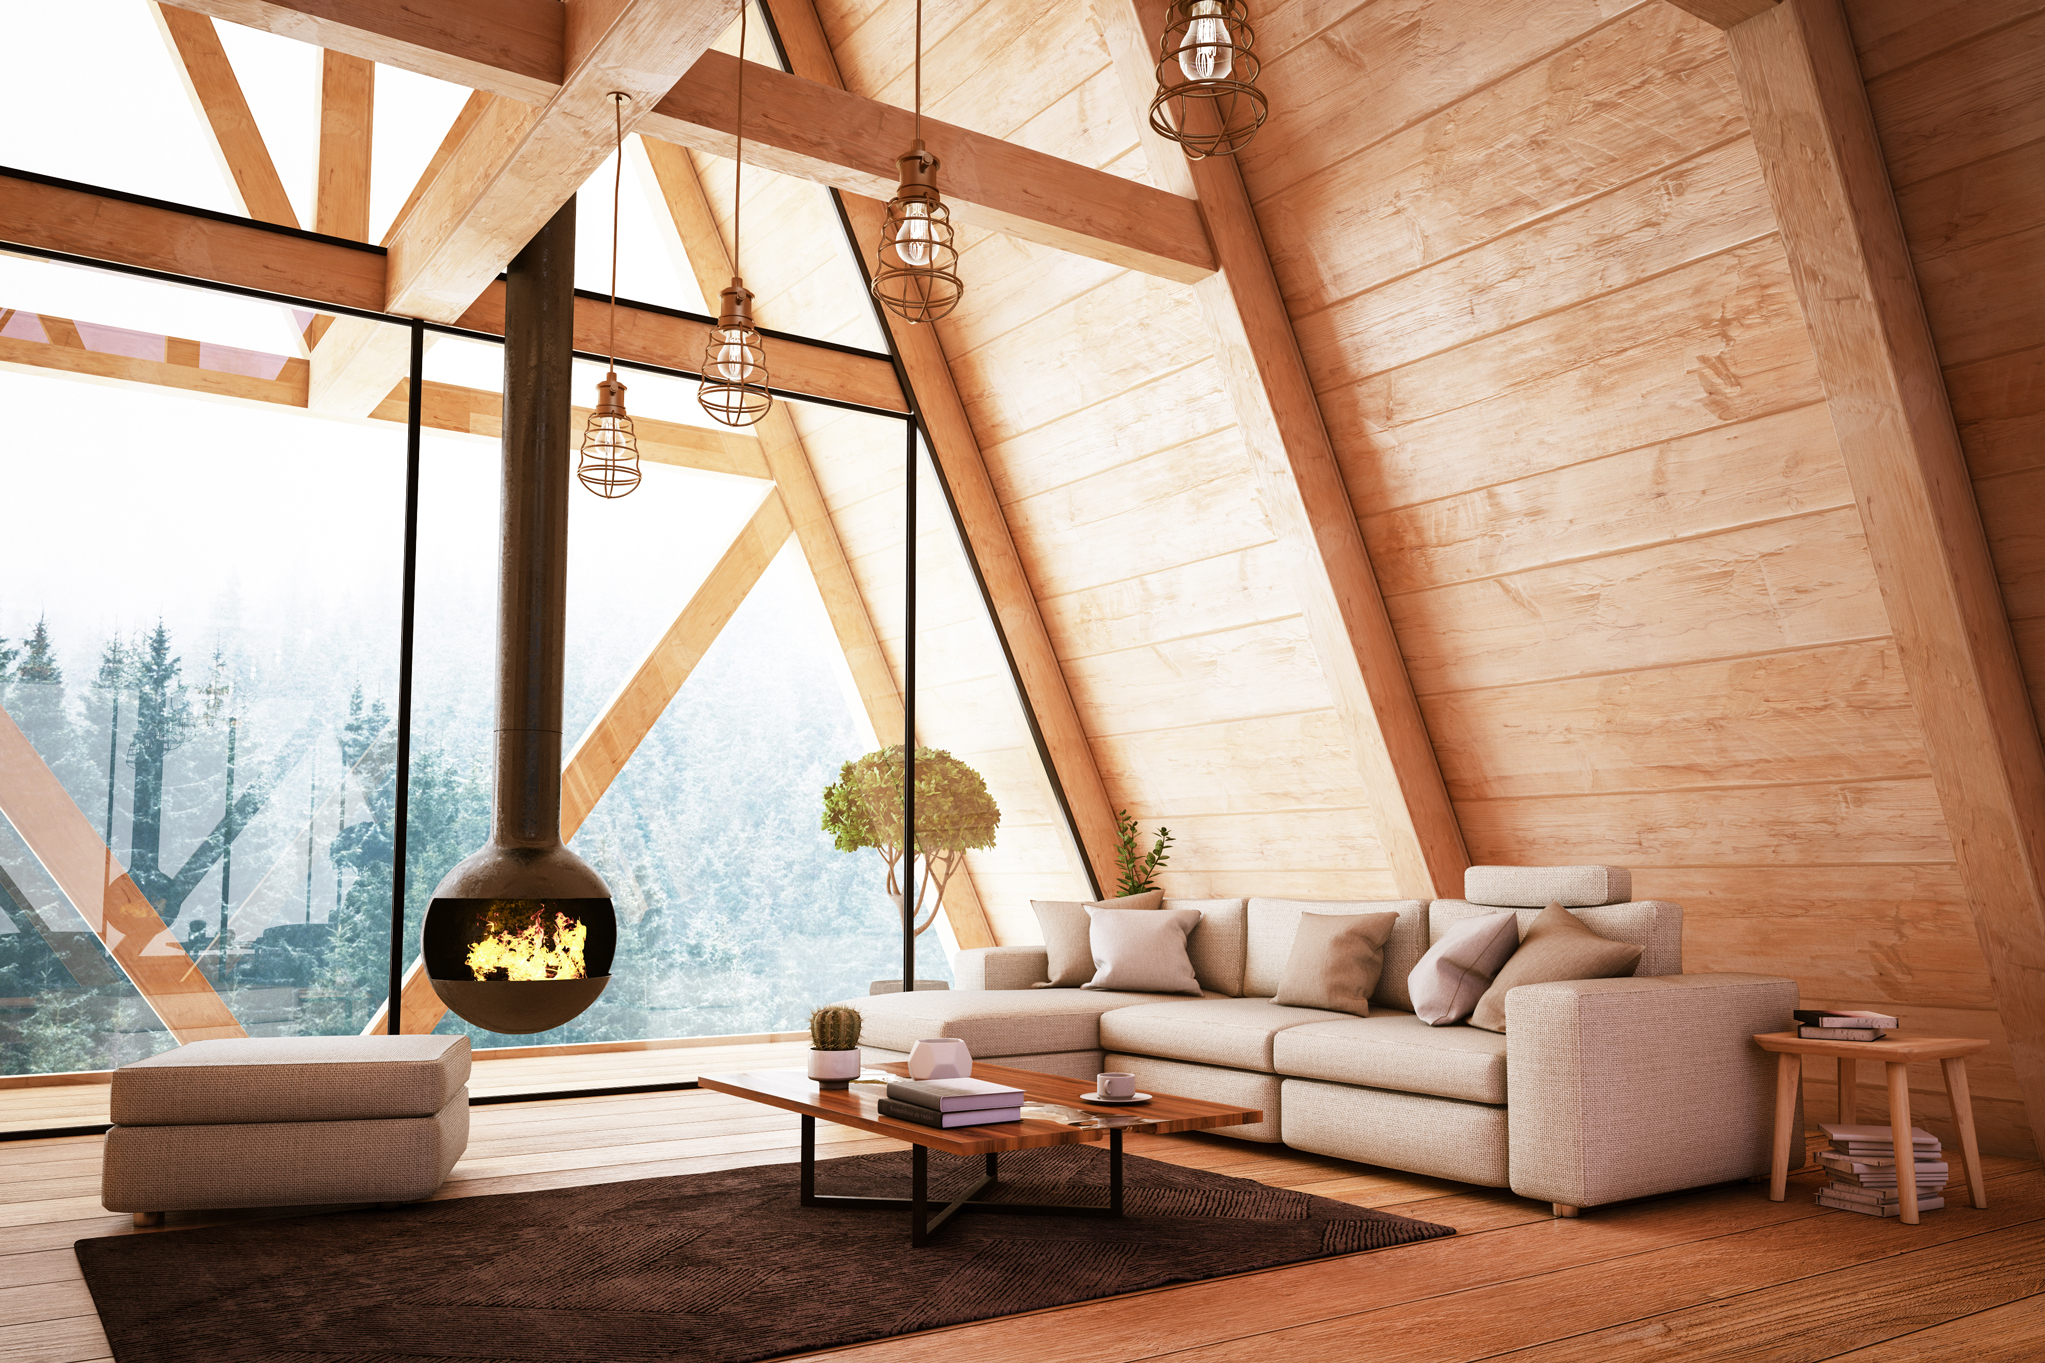 24 Best Rustic Decor Design Ideas in 2022 - Rustic Home Decor Inspiration